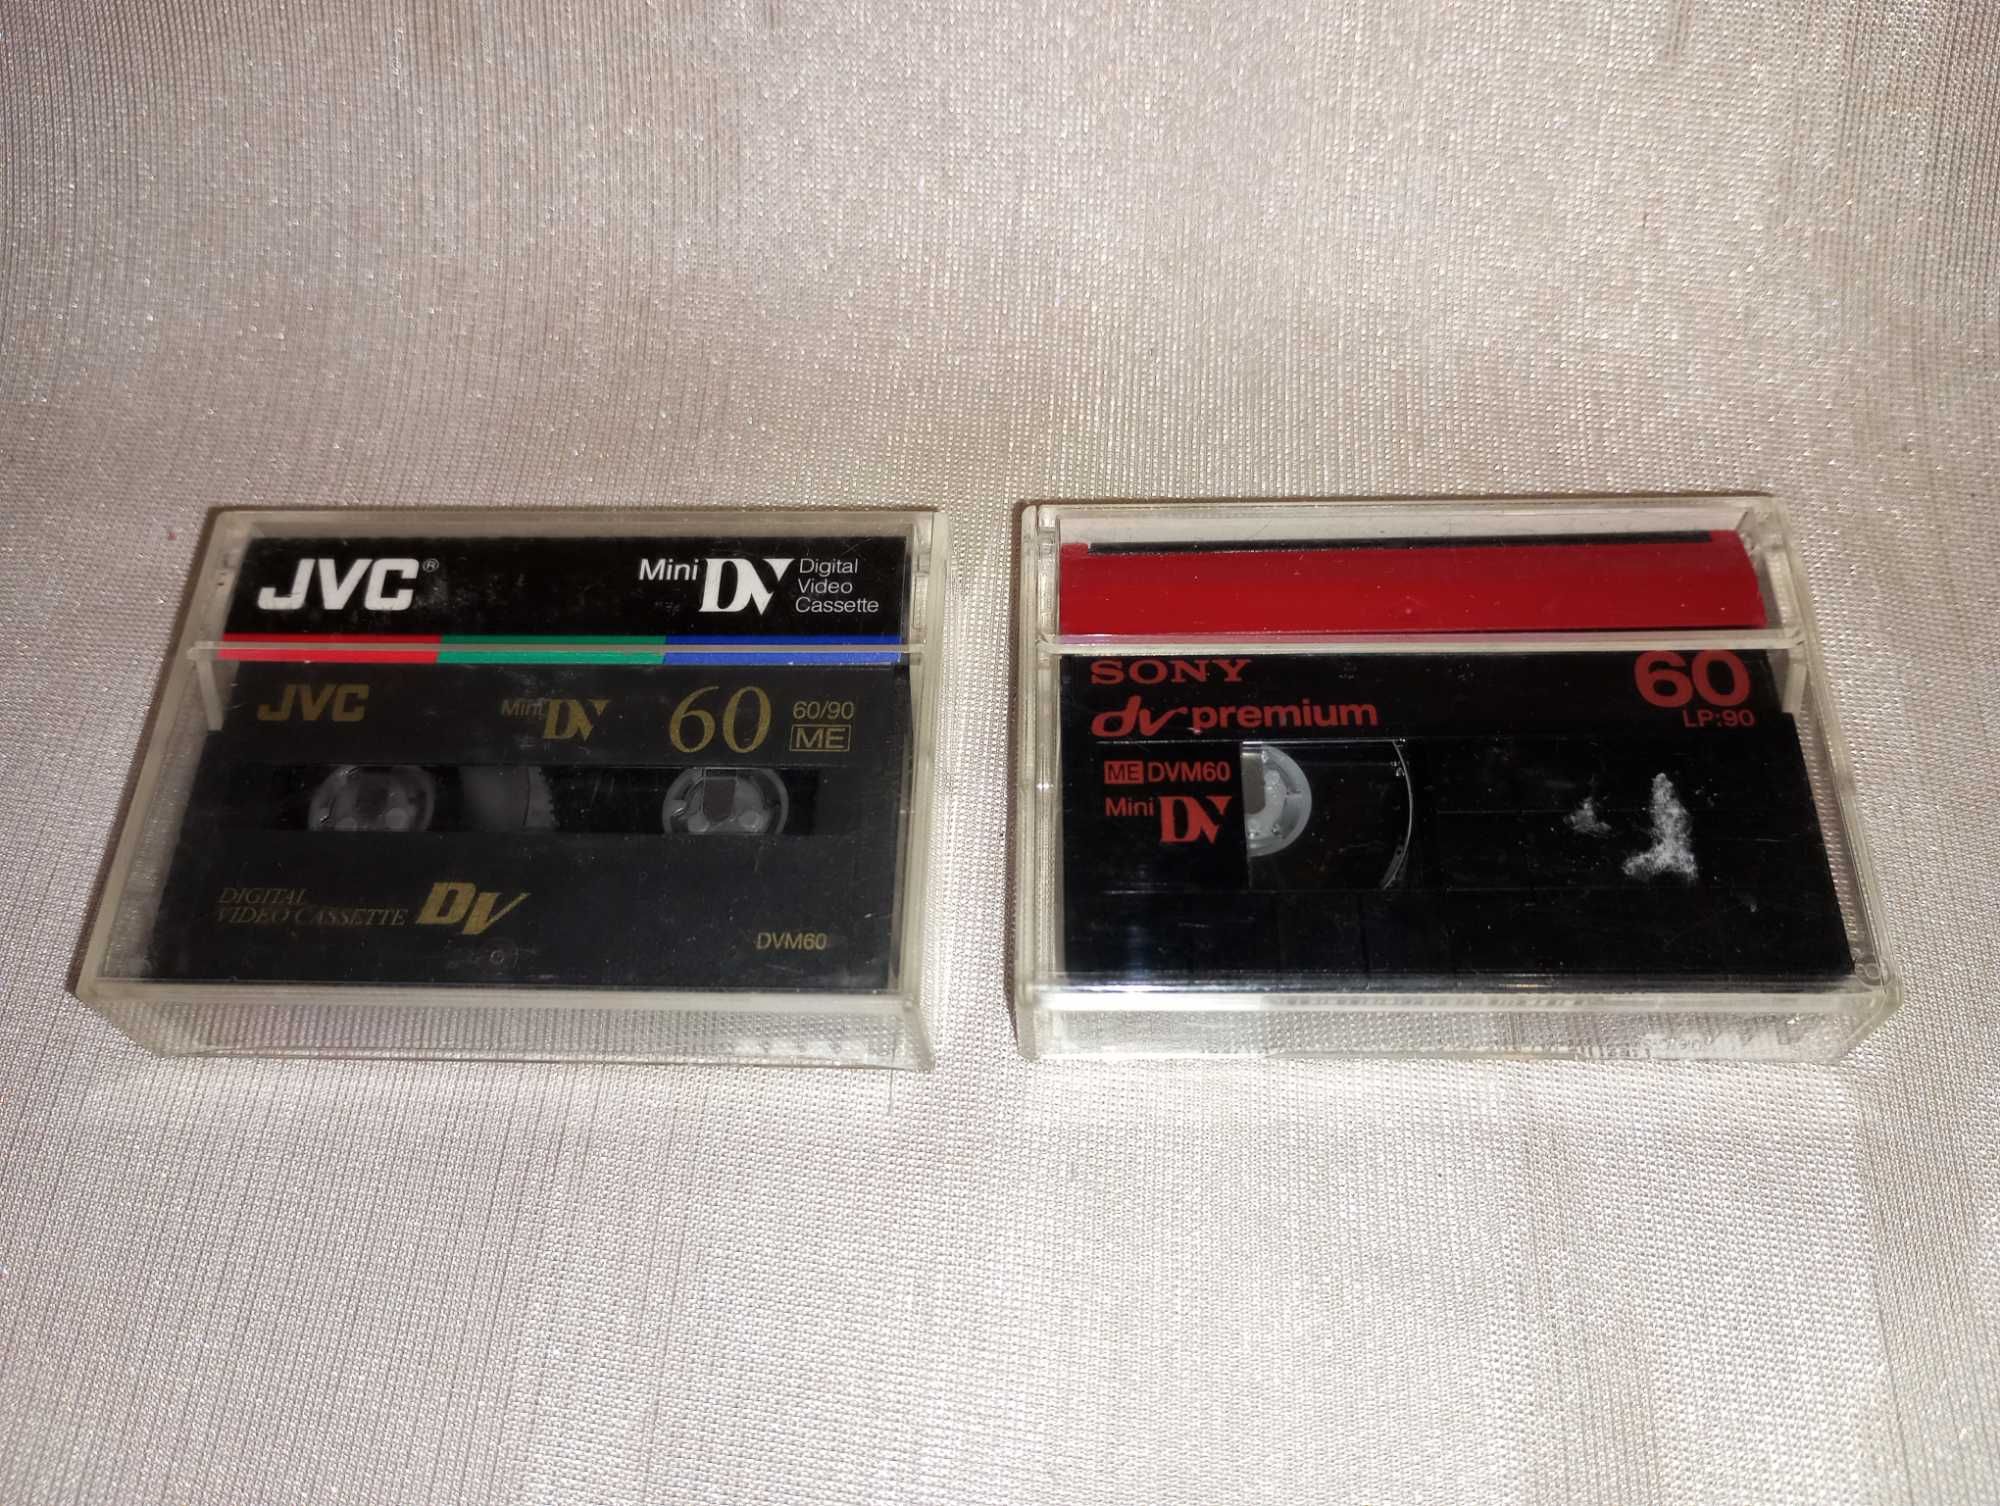 Касcета для видеокамеры видеокассета JVC SONY premium mini DV 60